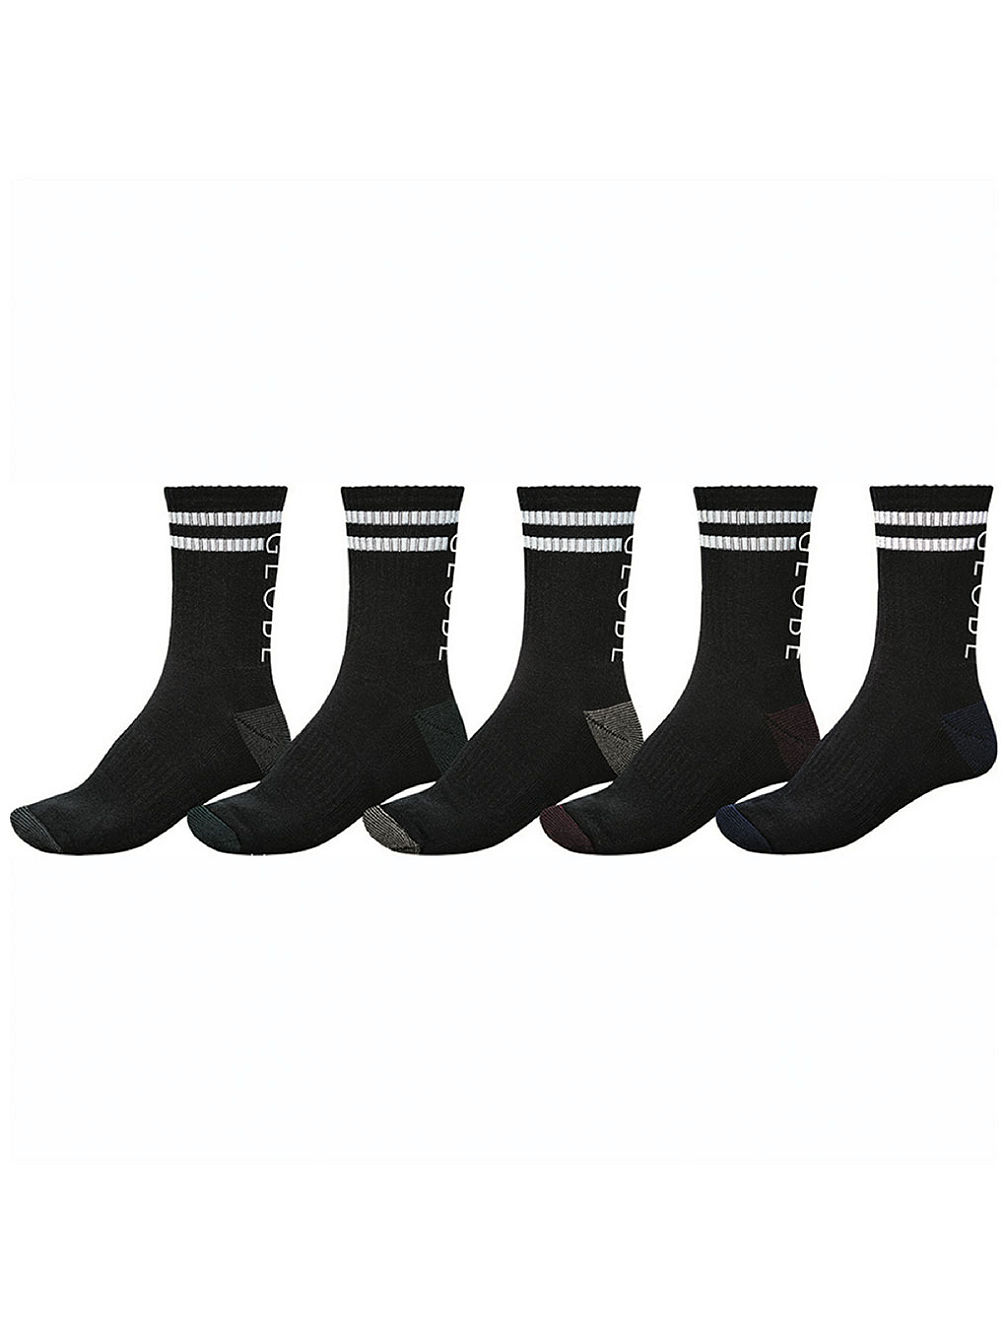 Carter Crew 5Pk Socks